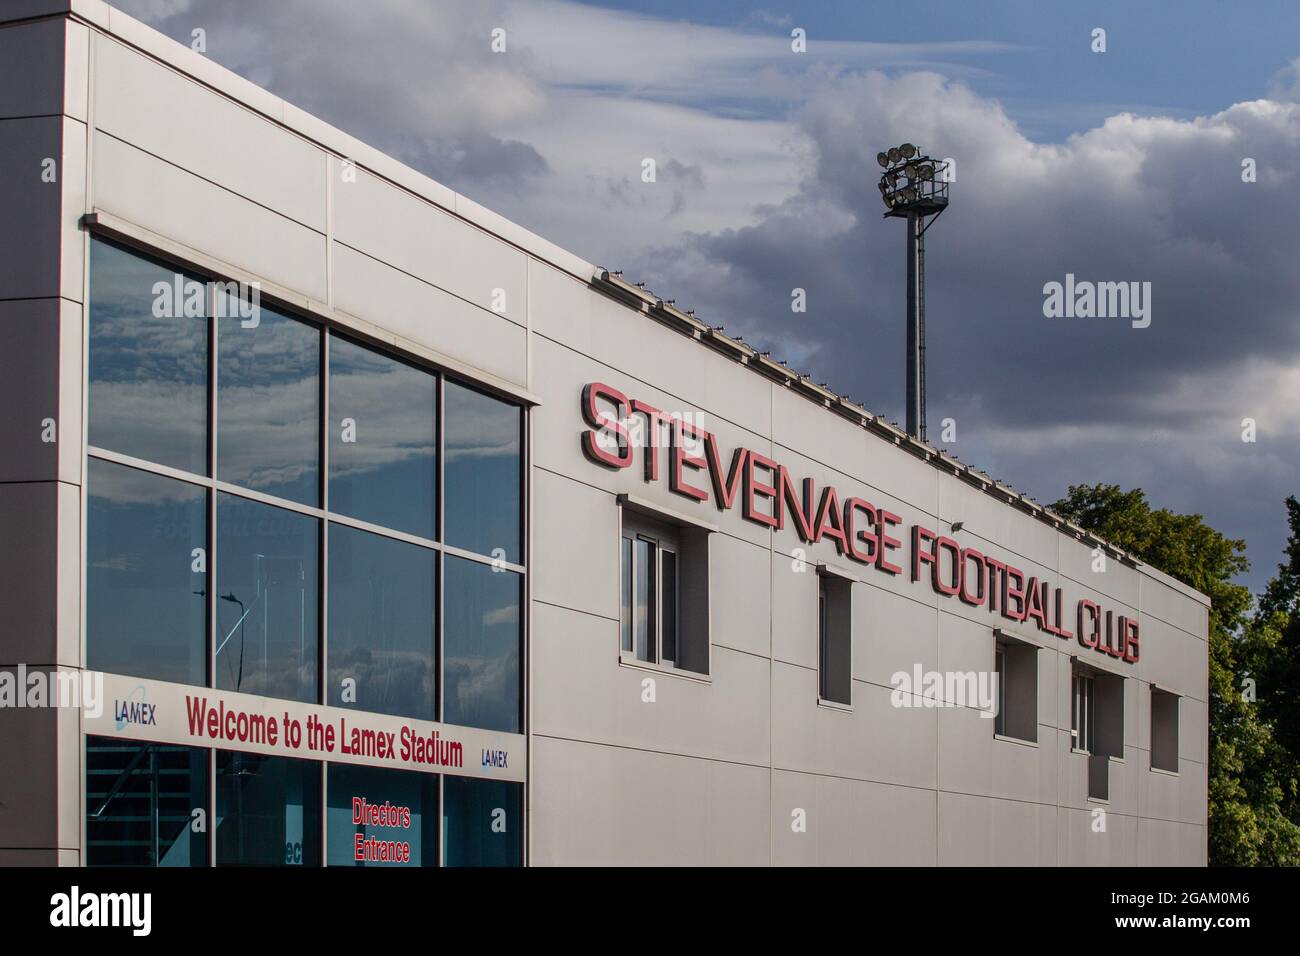 Front facia of Lamex Stadium, home of Stevenage Football Club Stock Photo